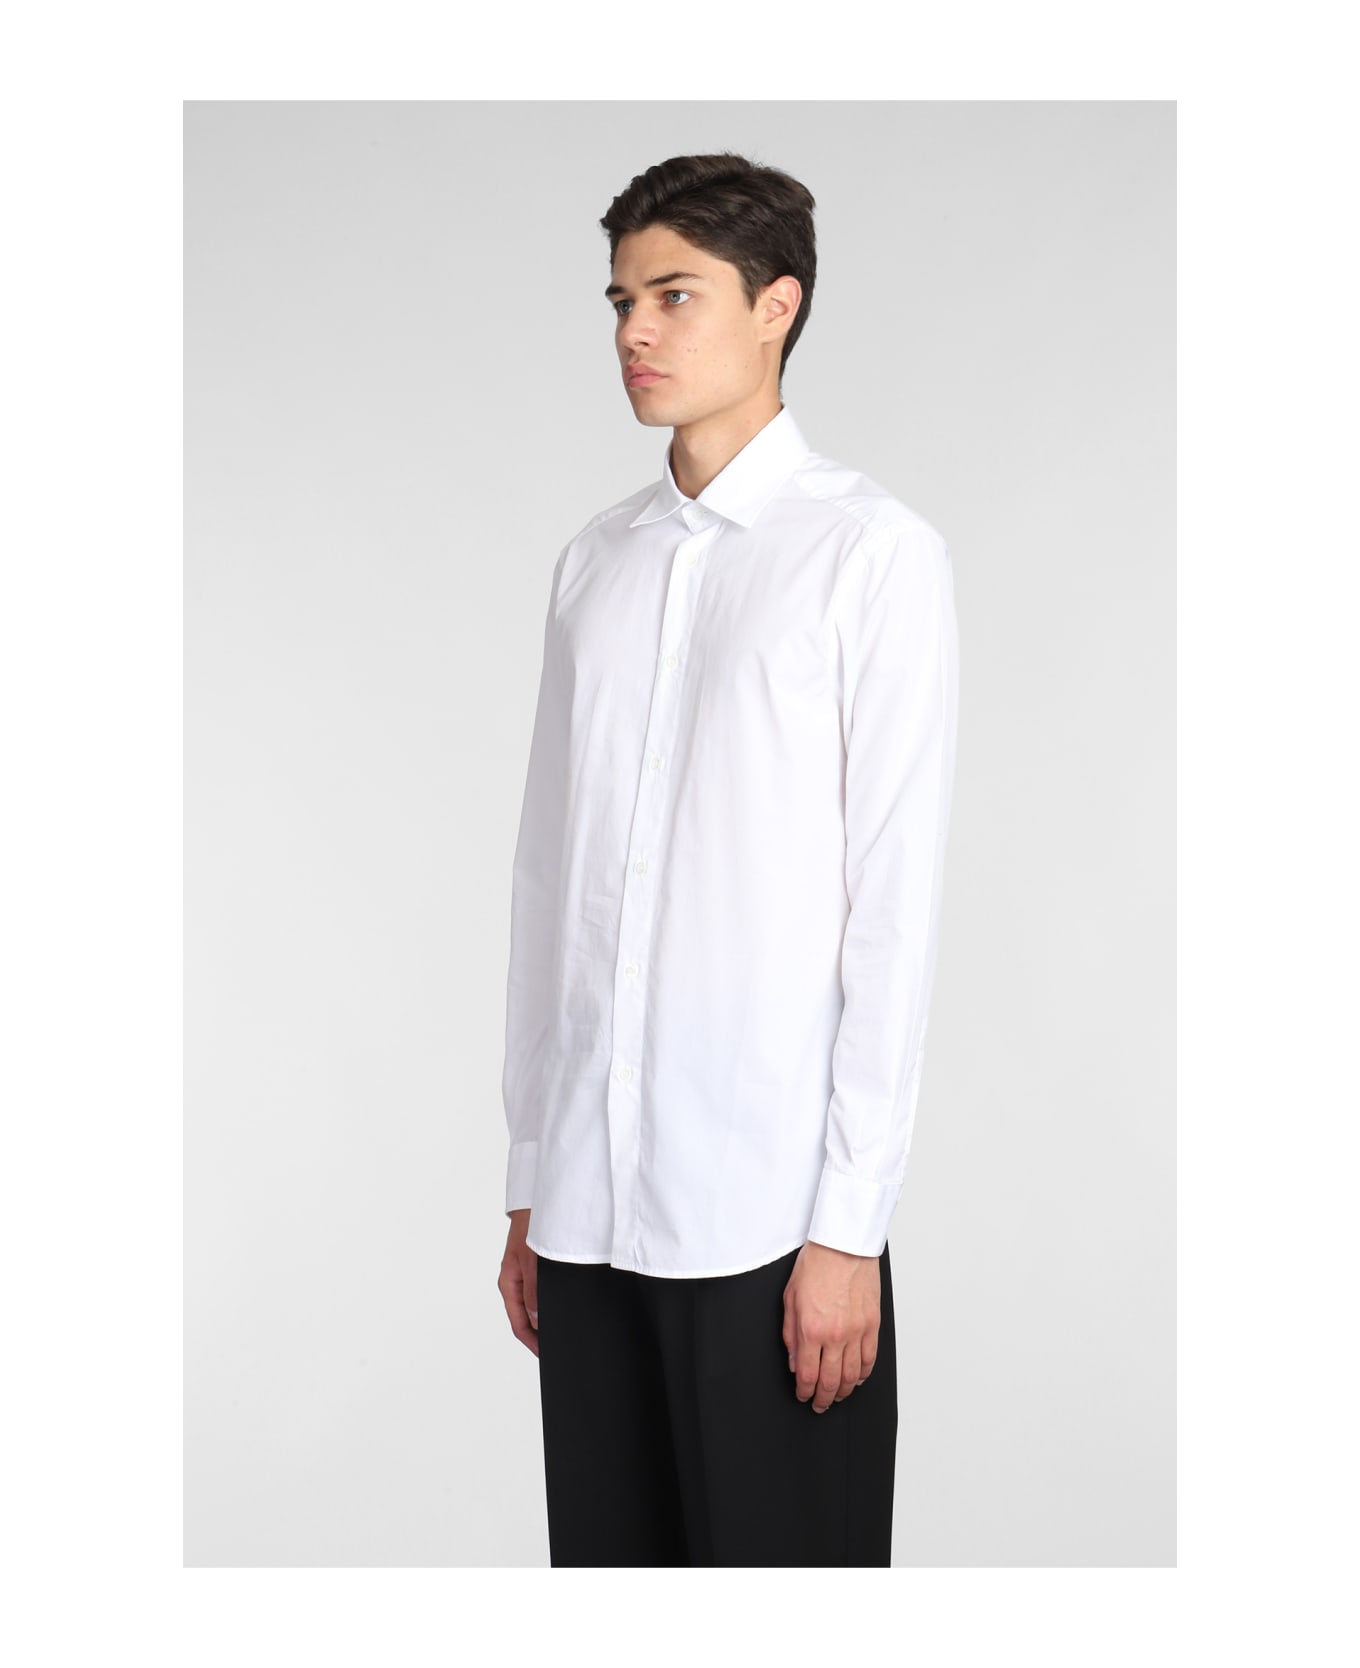 Barena Surian Shirt In White Cotton - white